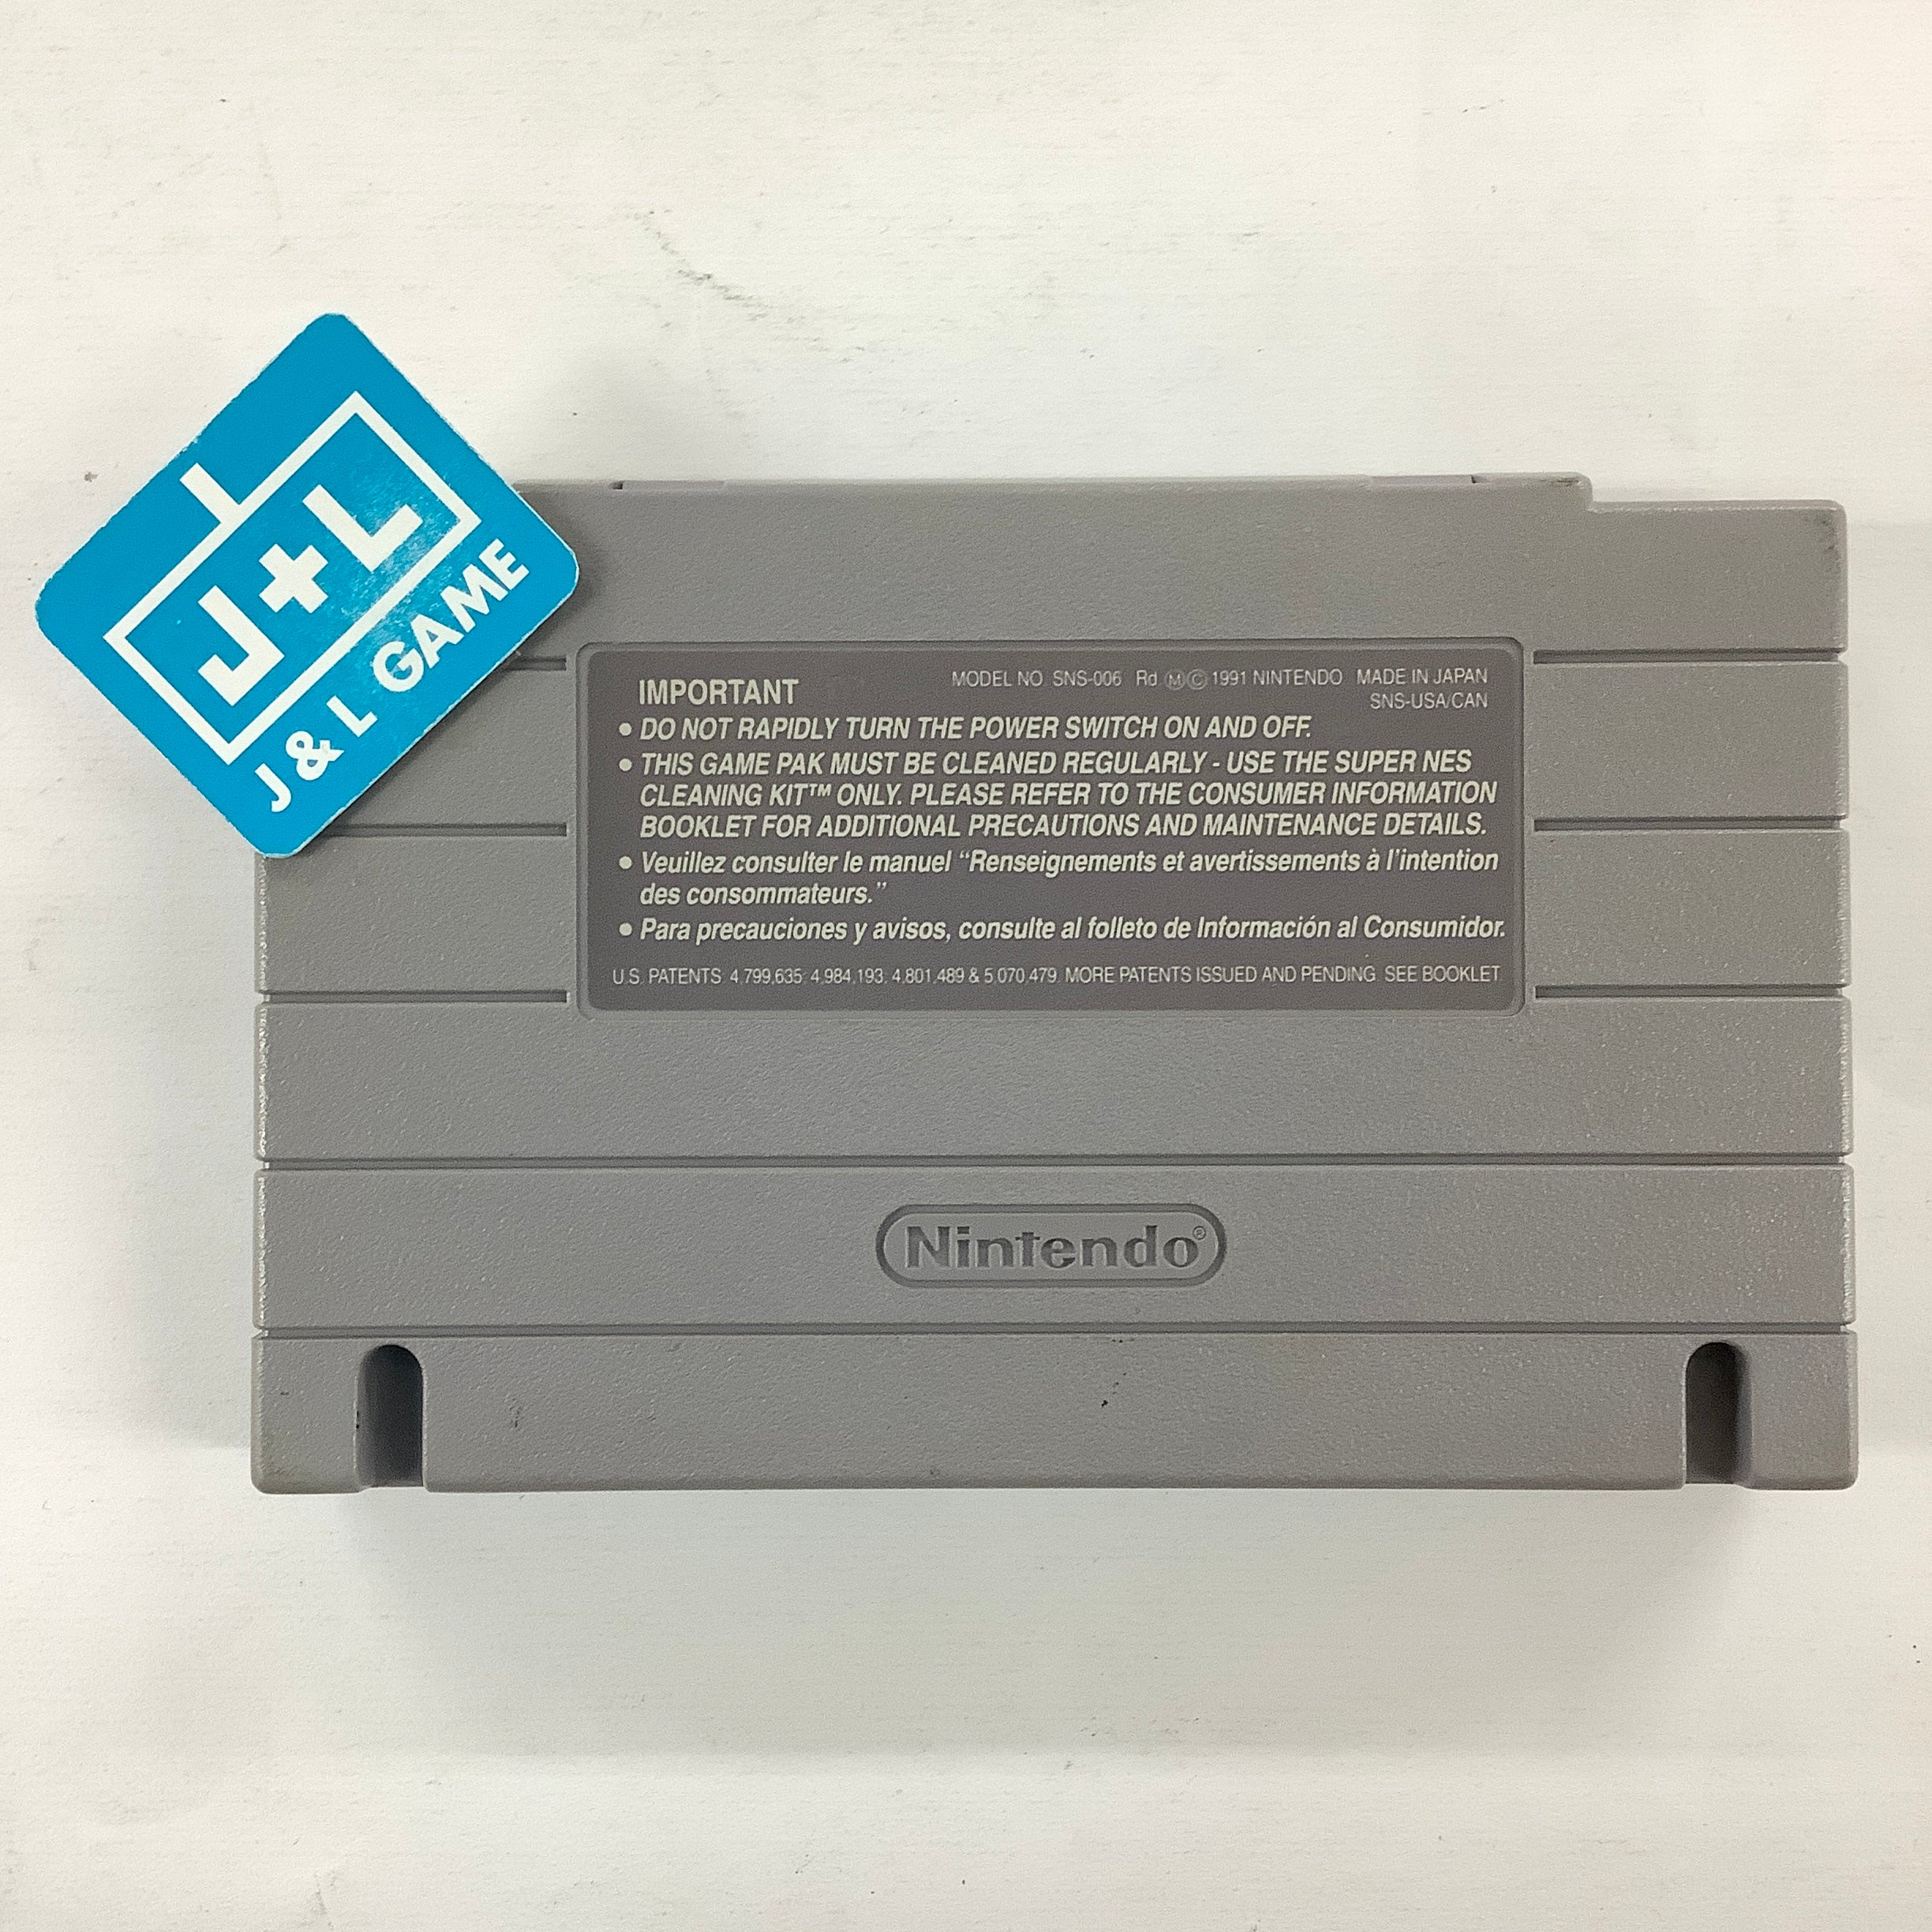 Musya - (SNES) Super Nintendo [Pre-Owned] Video Games Seta Corporation   